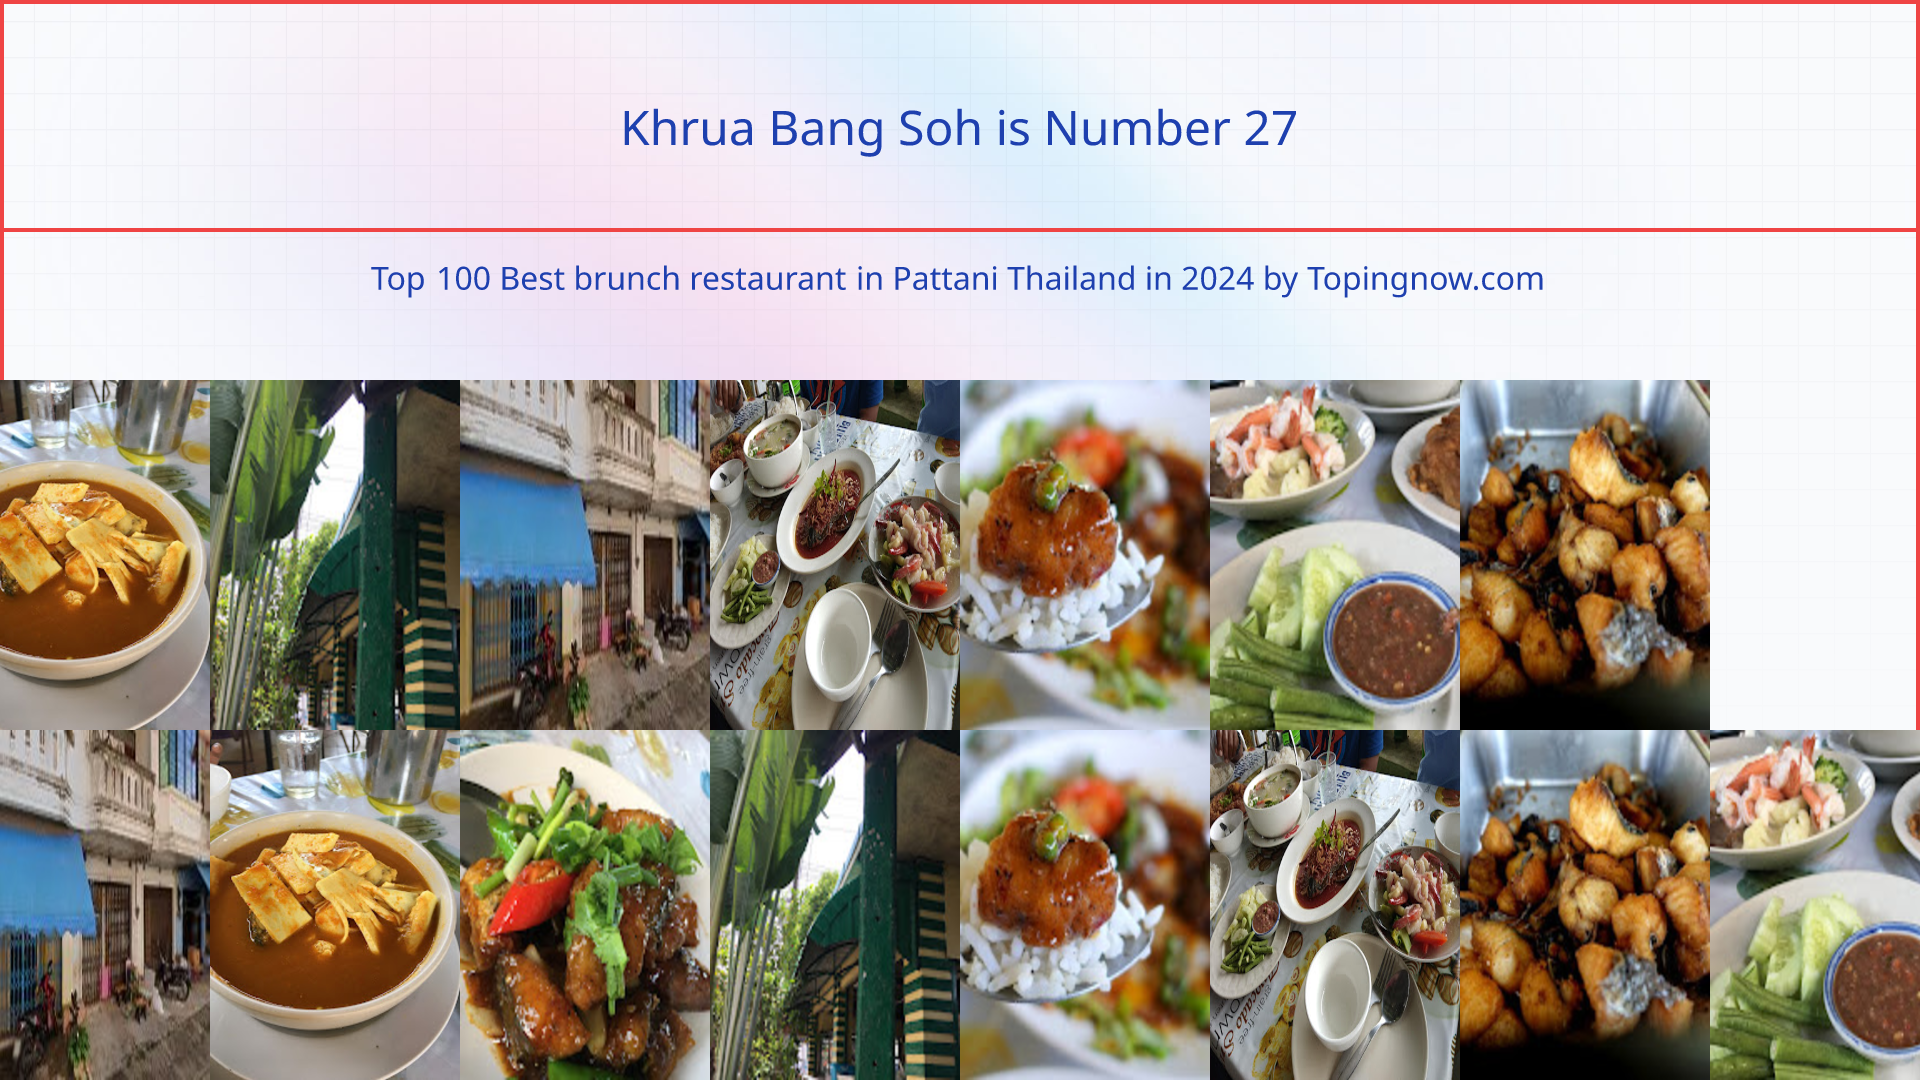 Khrua Bang Soh: Top 100 Best brunch restaurant in Pattani Thailand in 2024